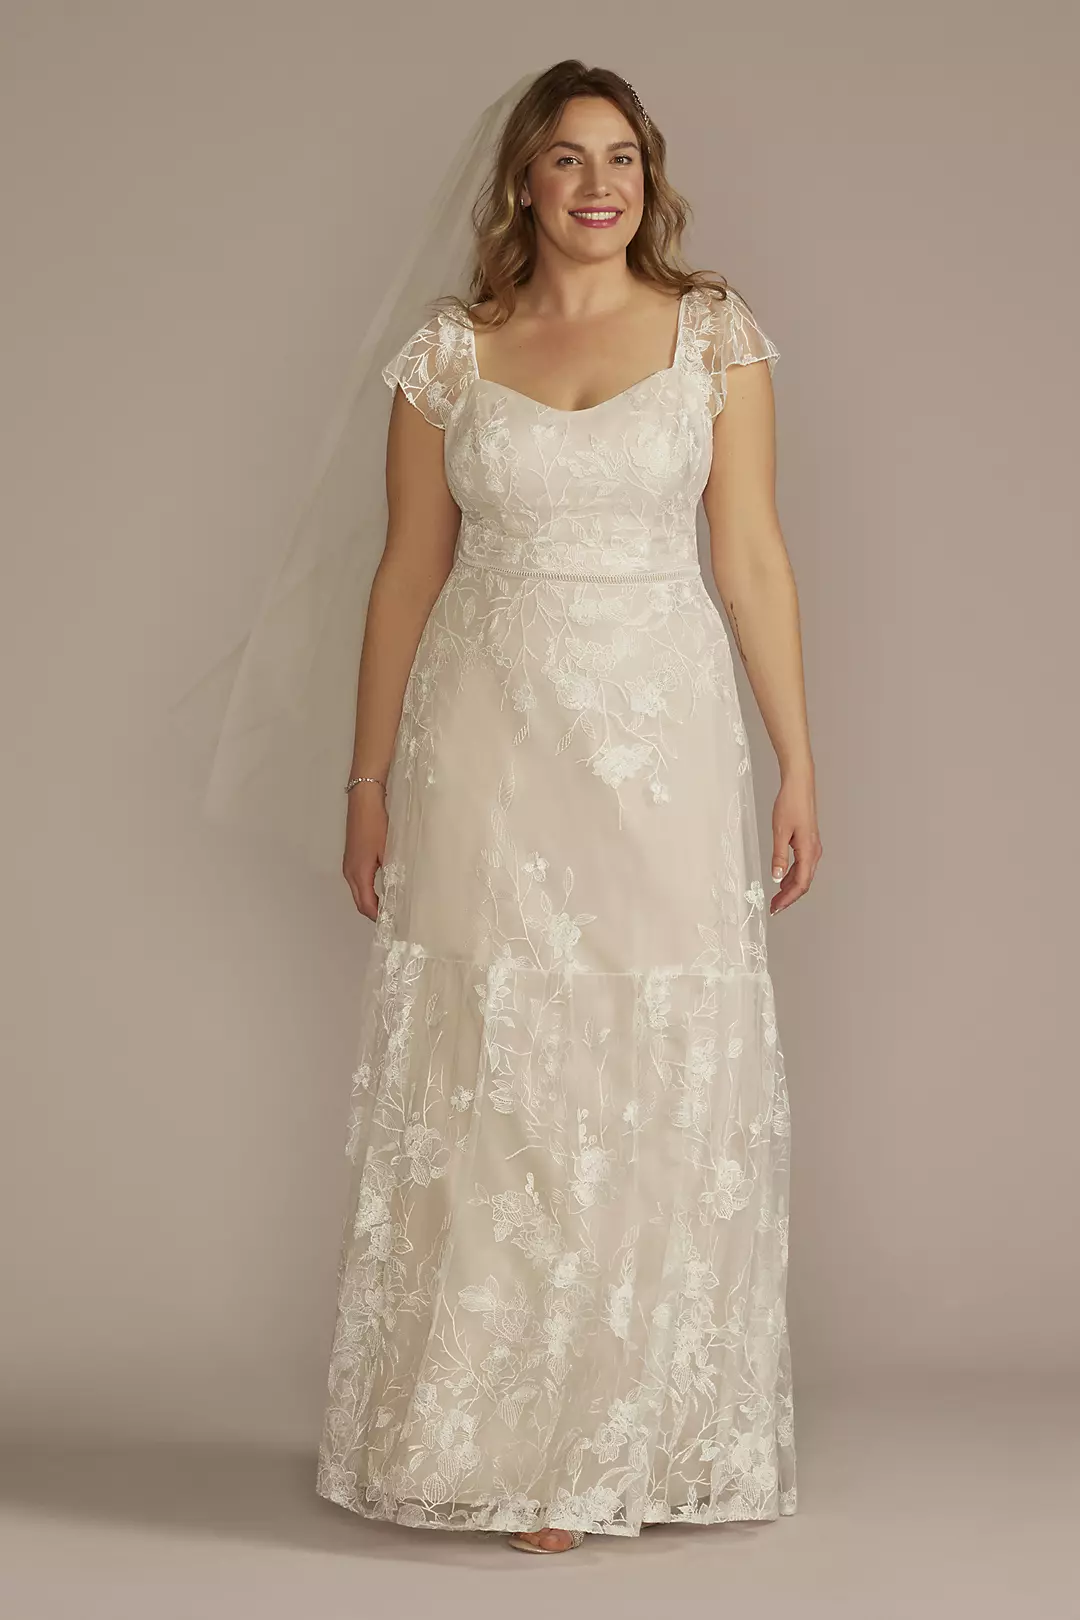 Recycled Lace Illusion Cap Sleeve Wedding Dress Image